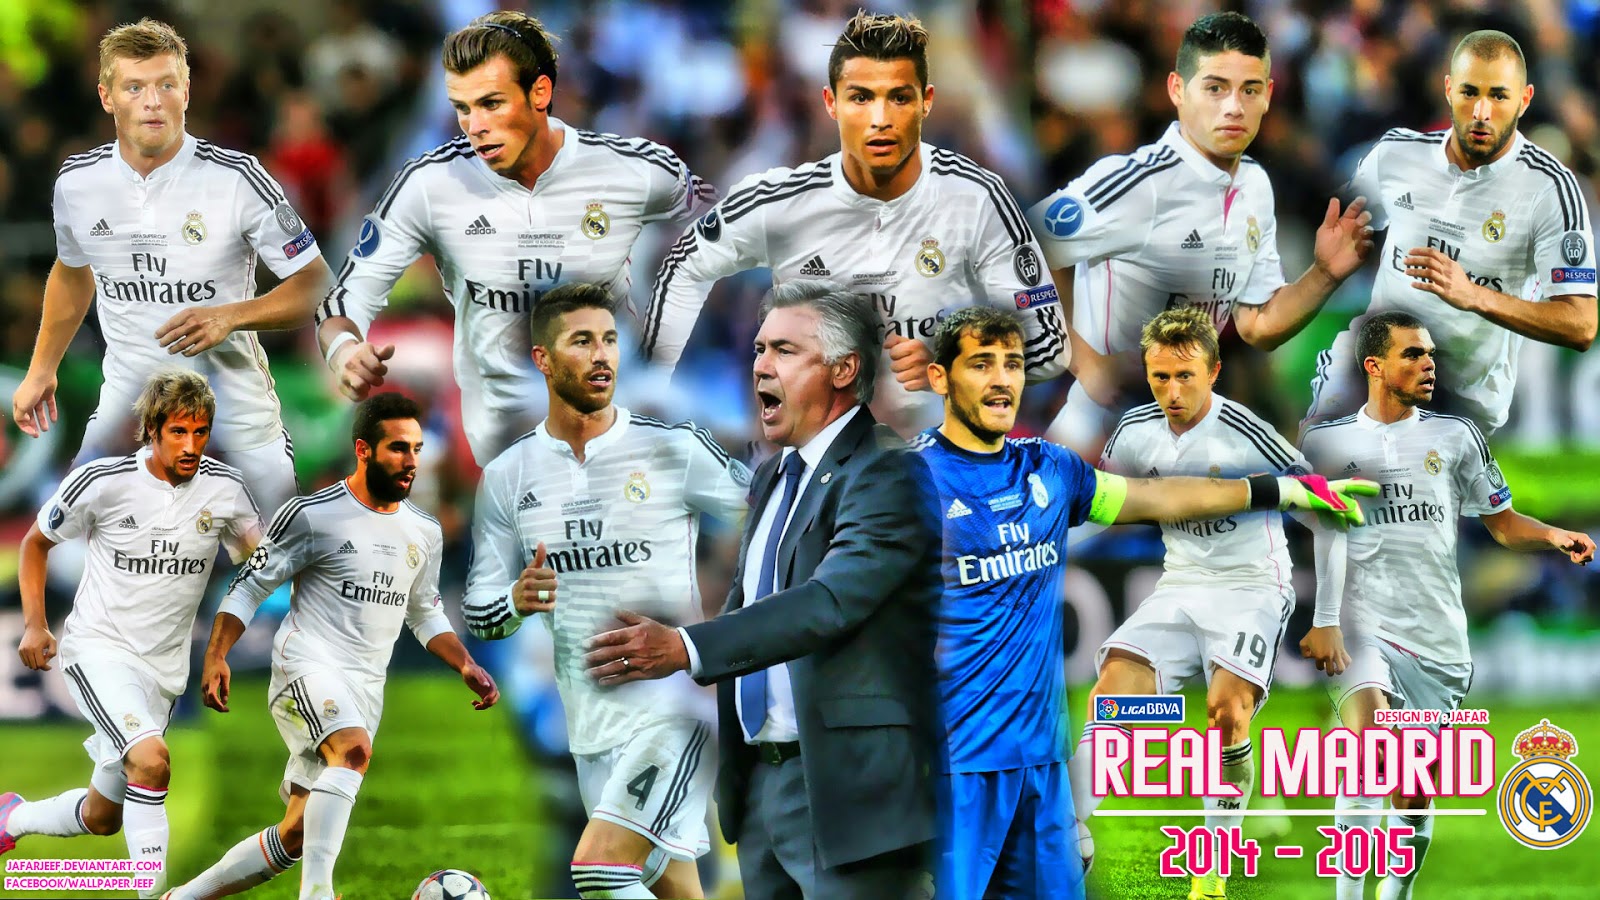 Real Madrid Wallpaper Full HD On